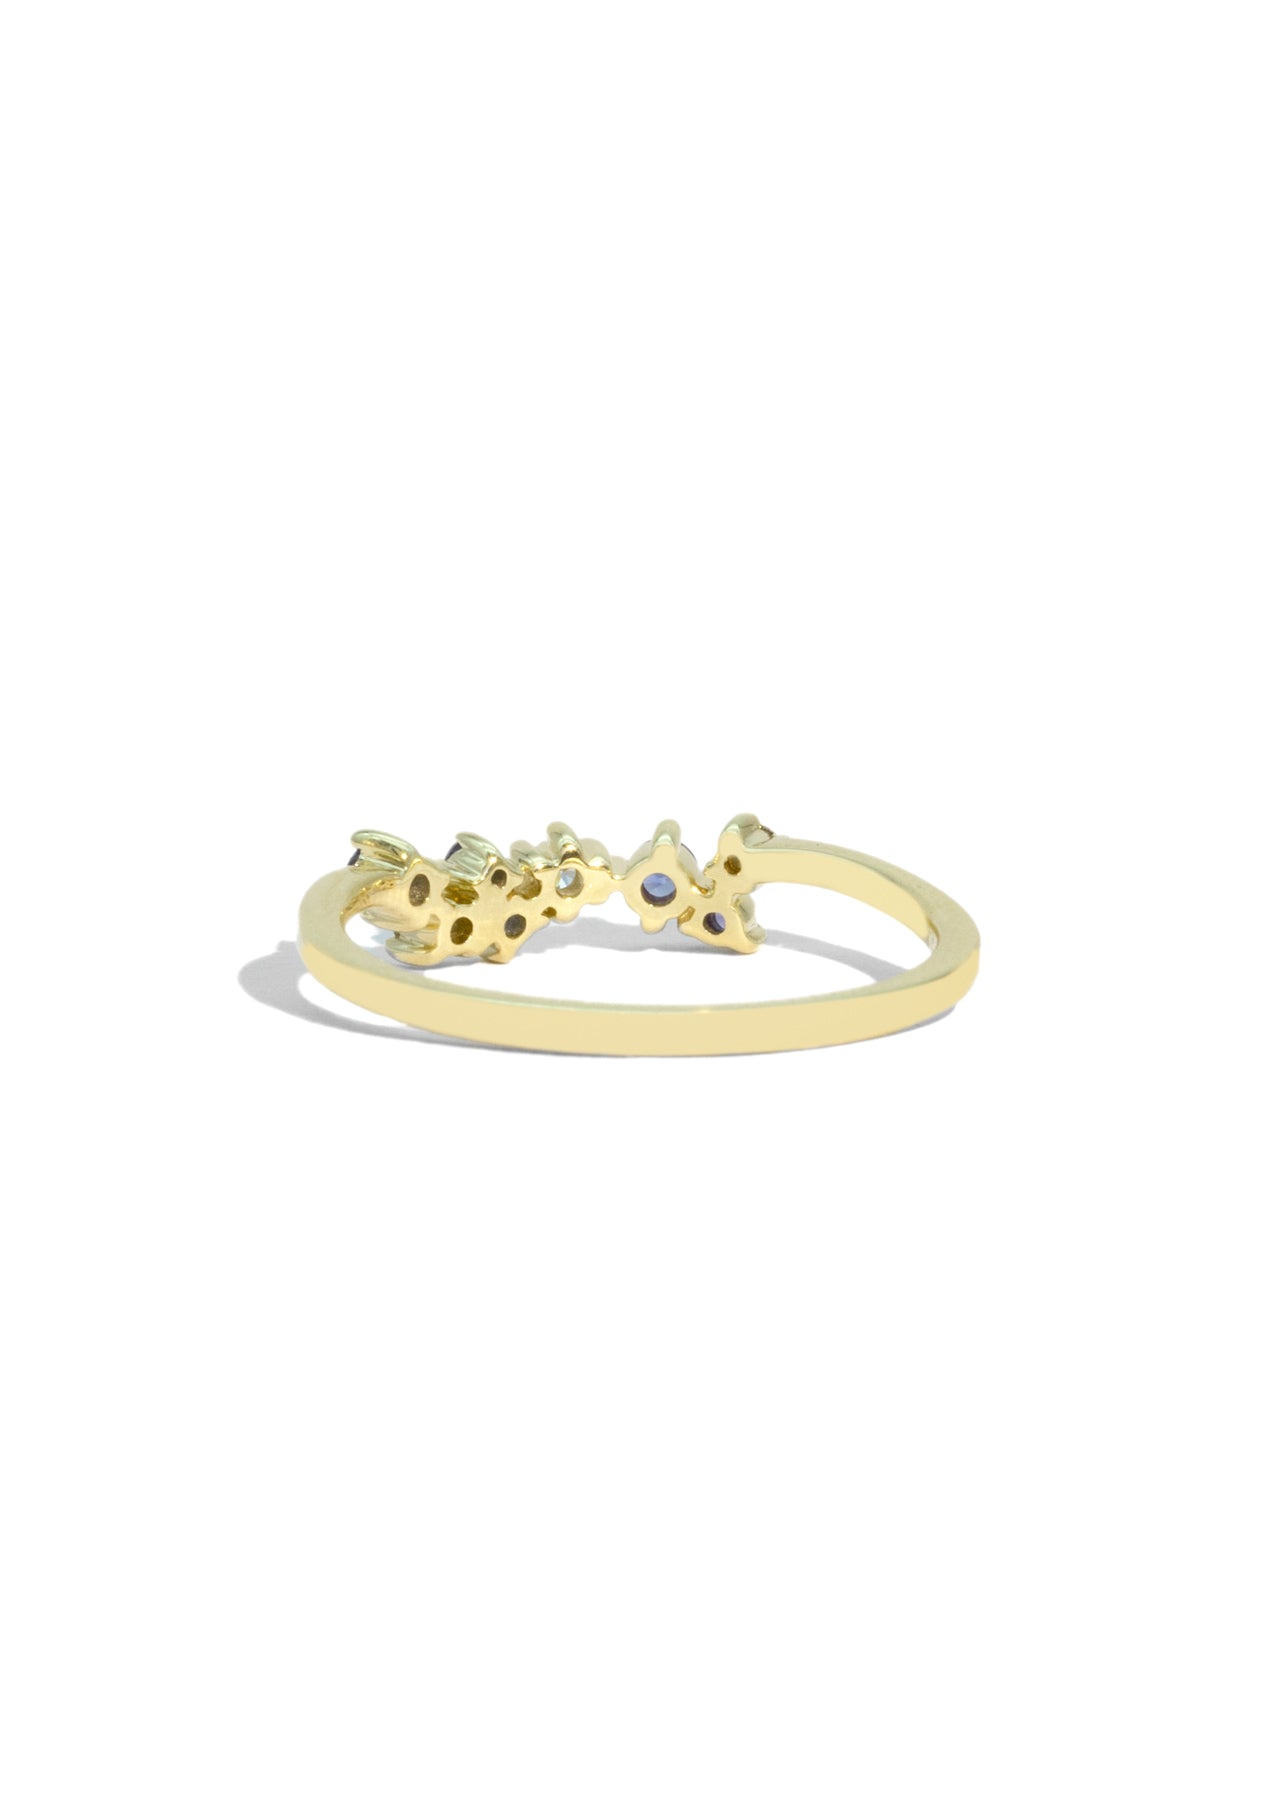 The Stephanie Vintage Sapphire and Diamond Ring